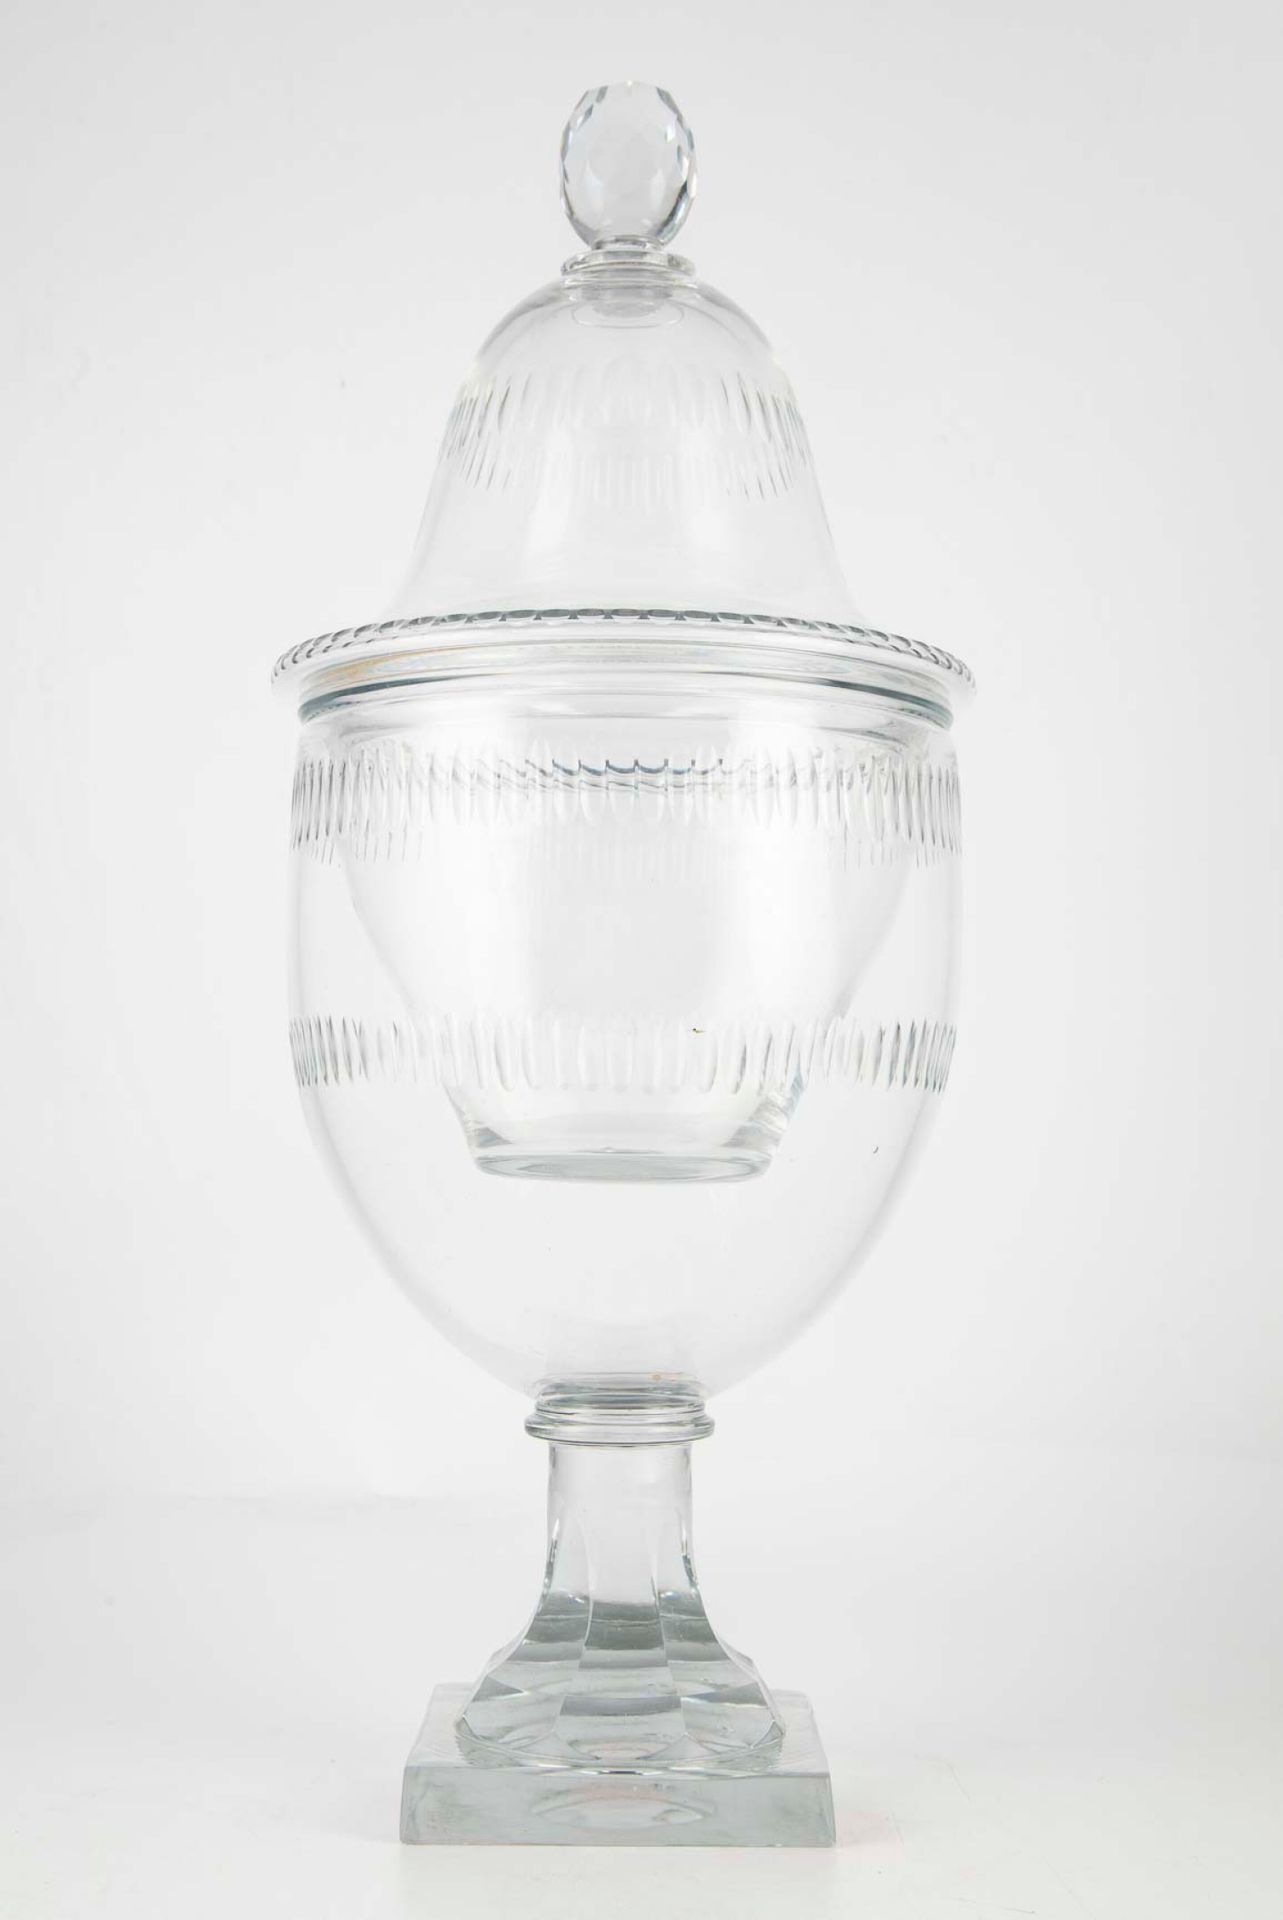 Null 重要的有盖冲杯在切割水晶底座上。有了它的玻璃衬里。可能是英语工作。

H.55厘米